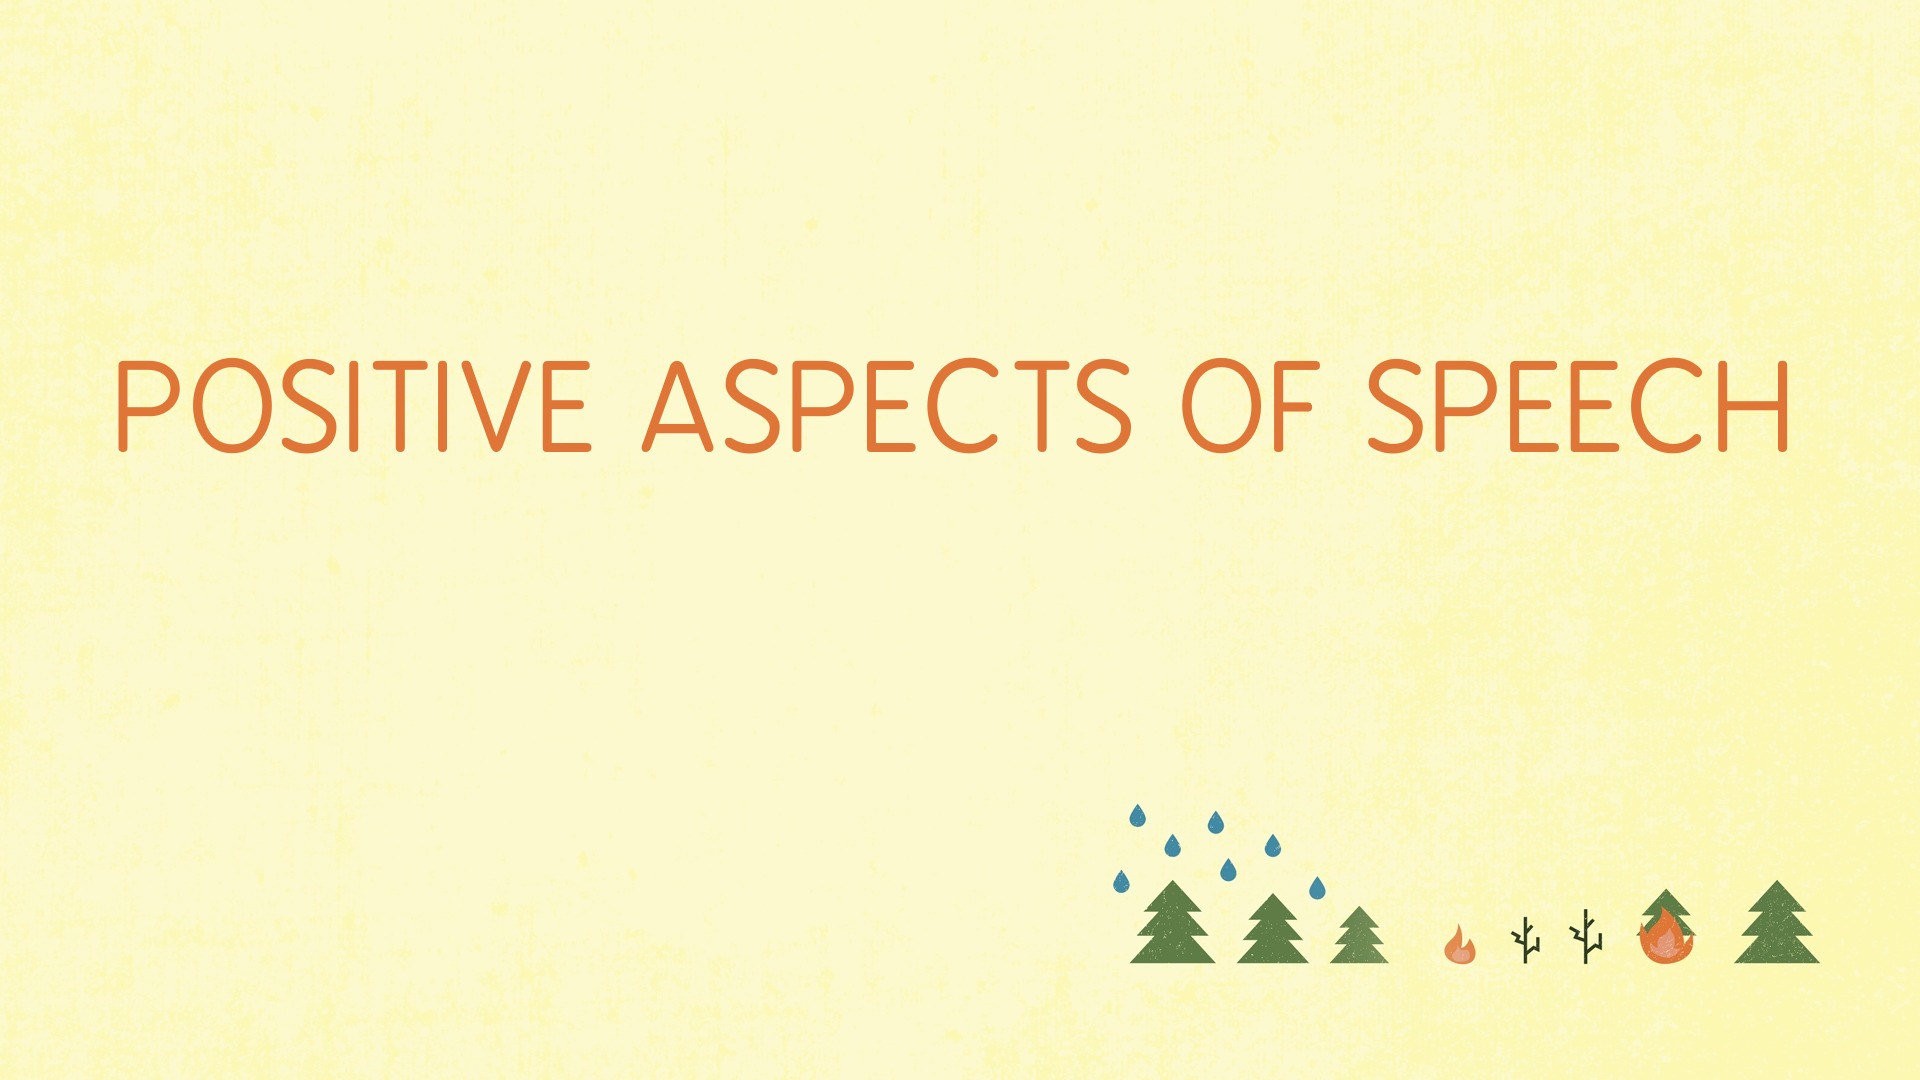 Positive aspects of speech